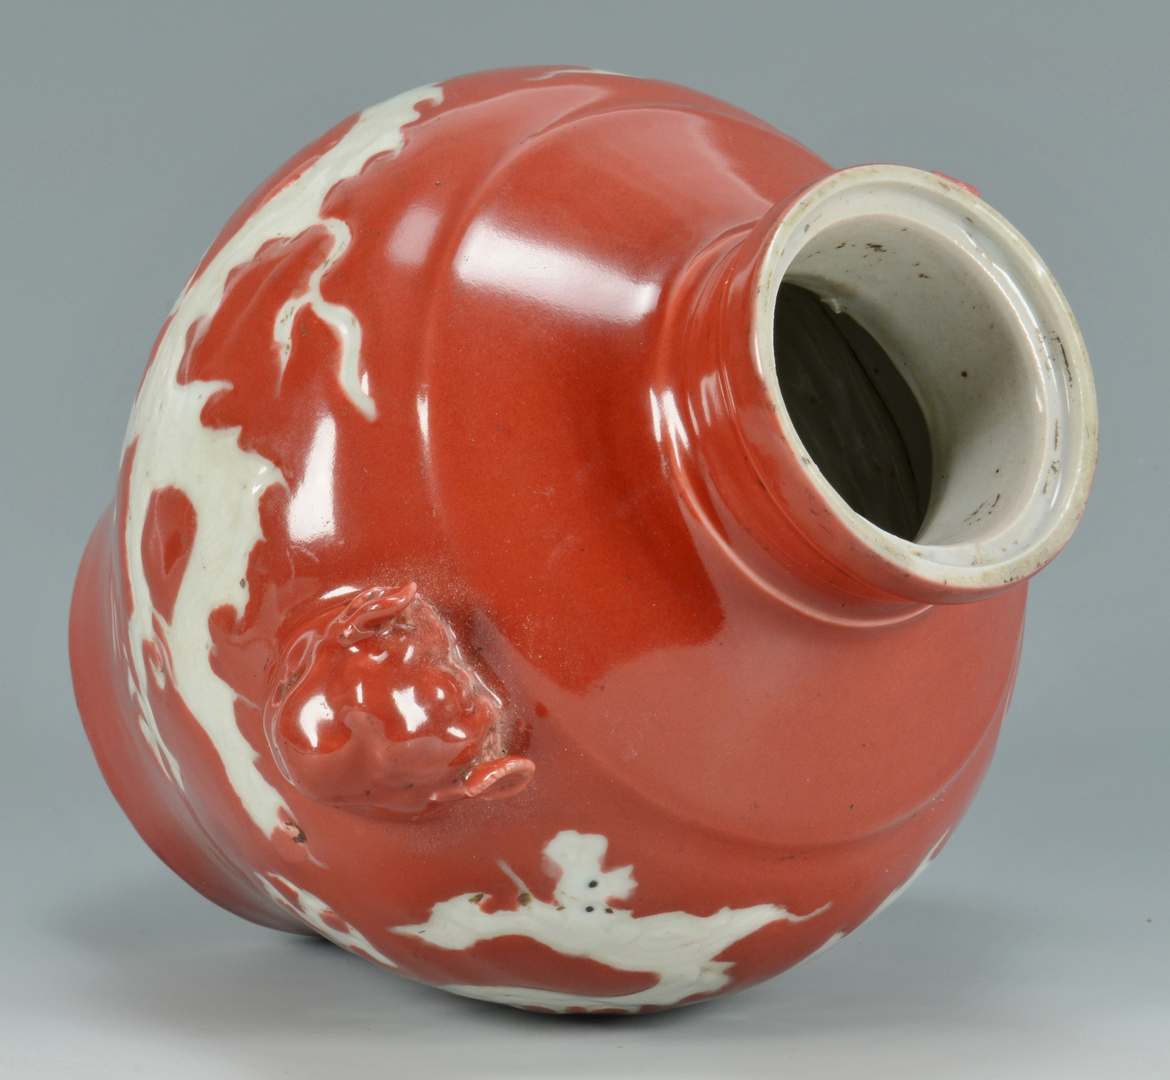 Lot 3088277: Chinese Dragon Vase